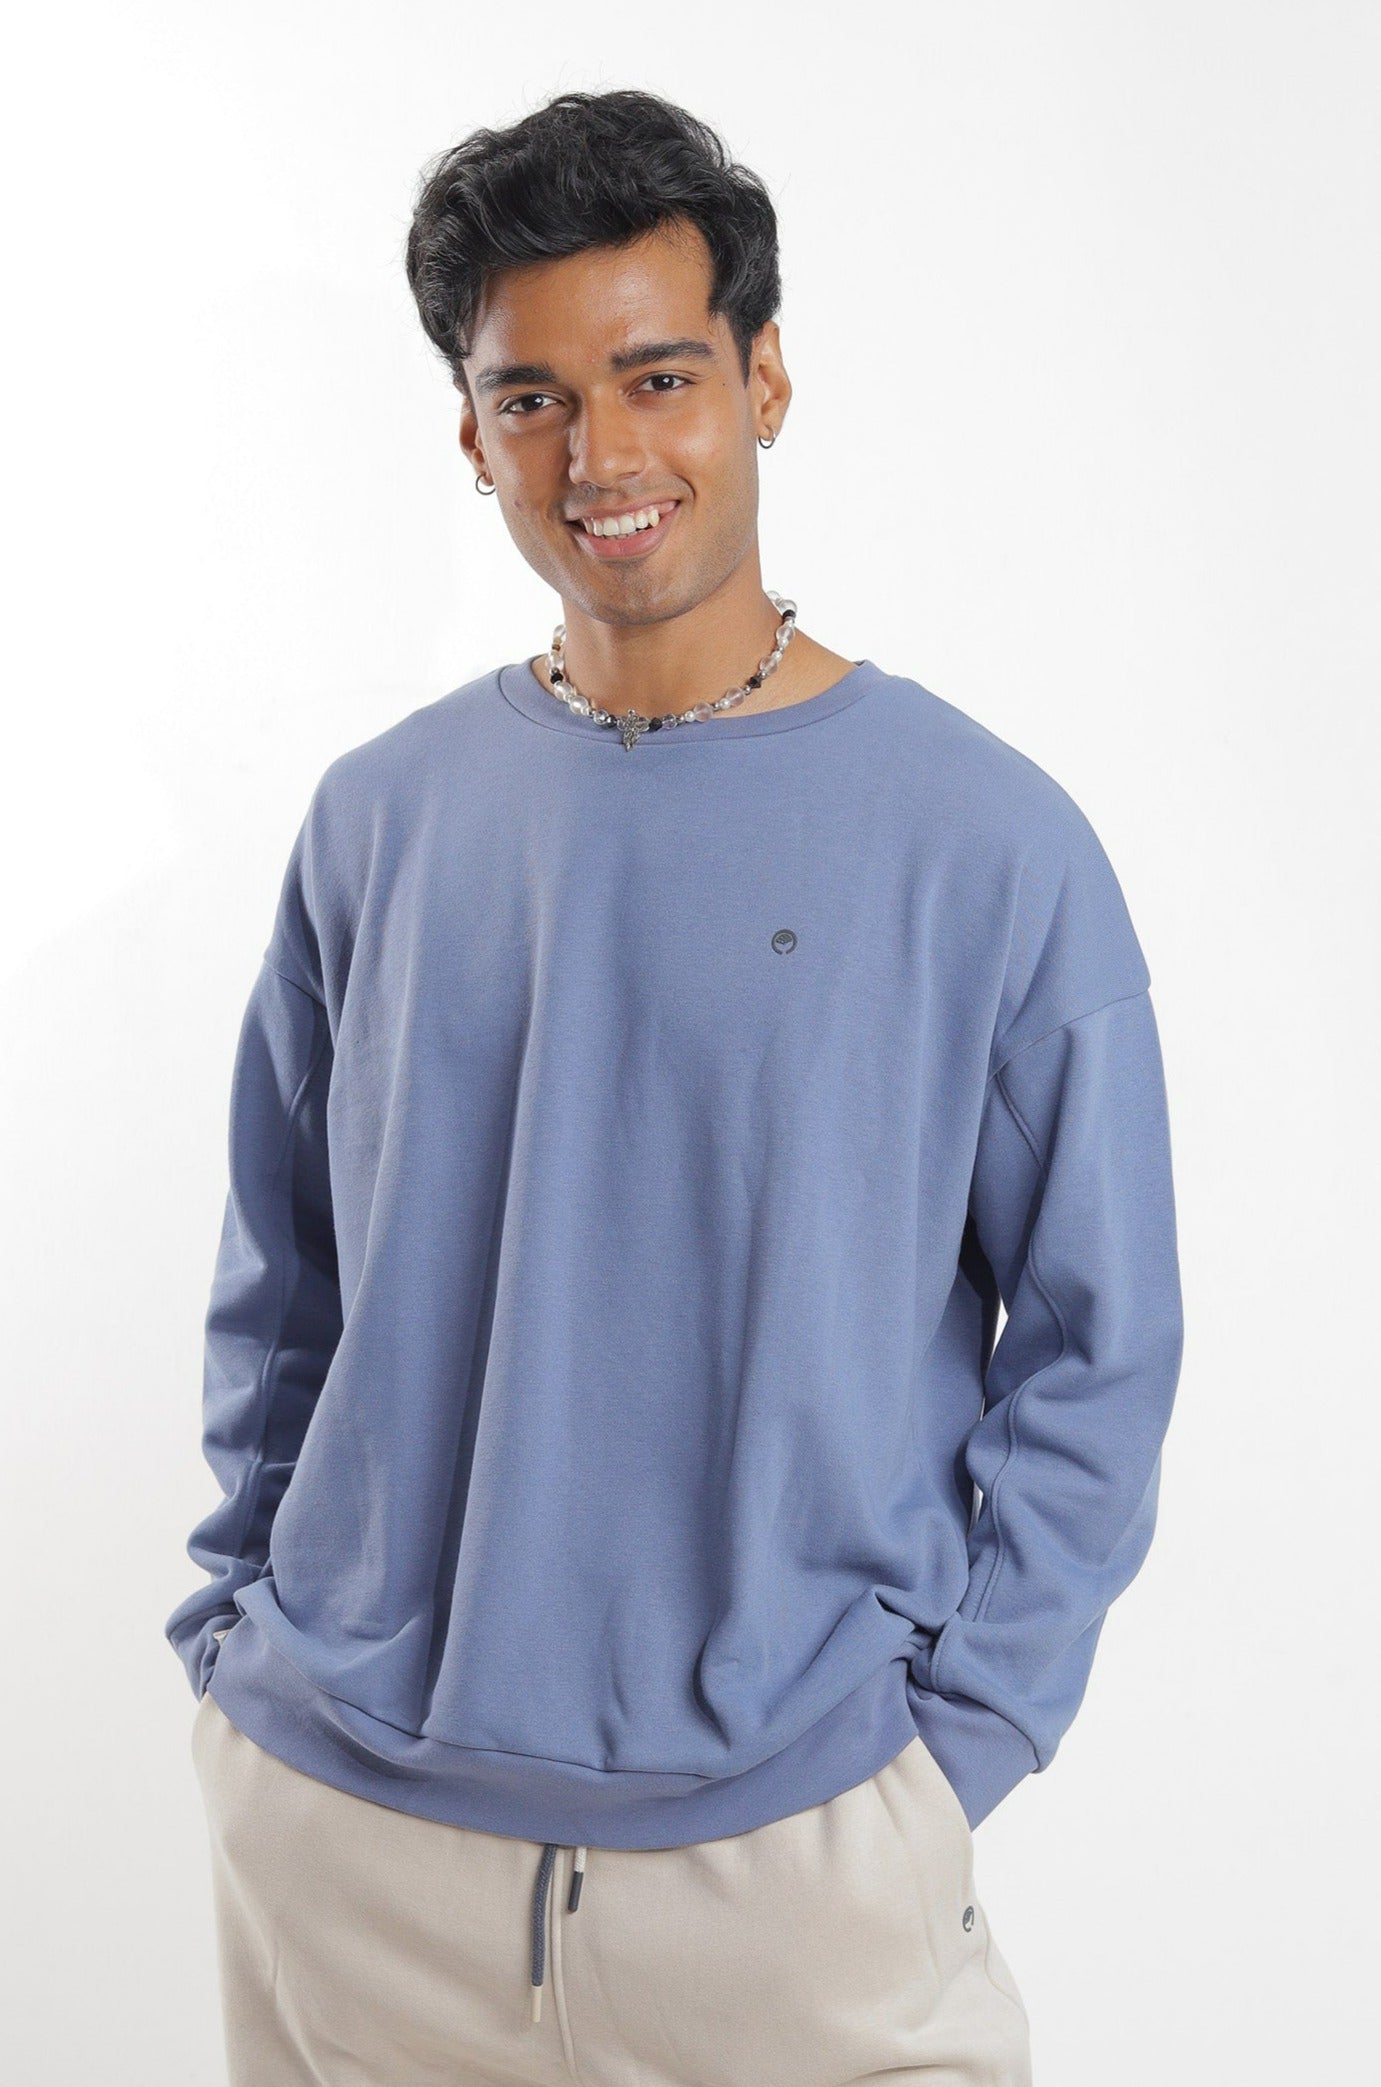 Lotus Sweatshirt for Men - Moonlight Blue